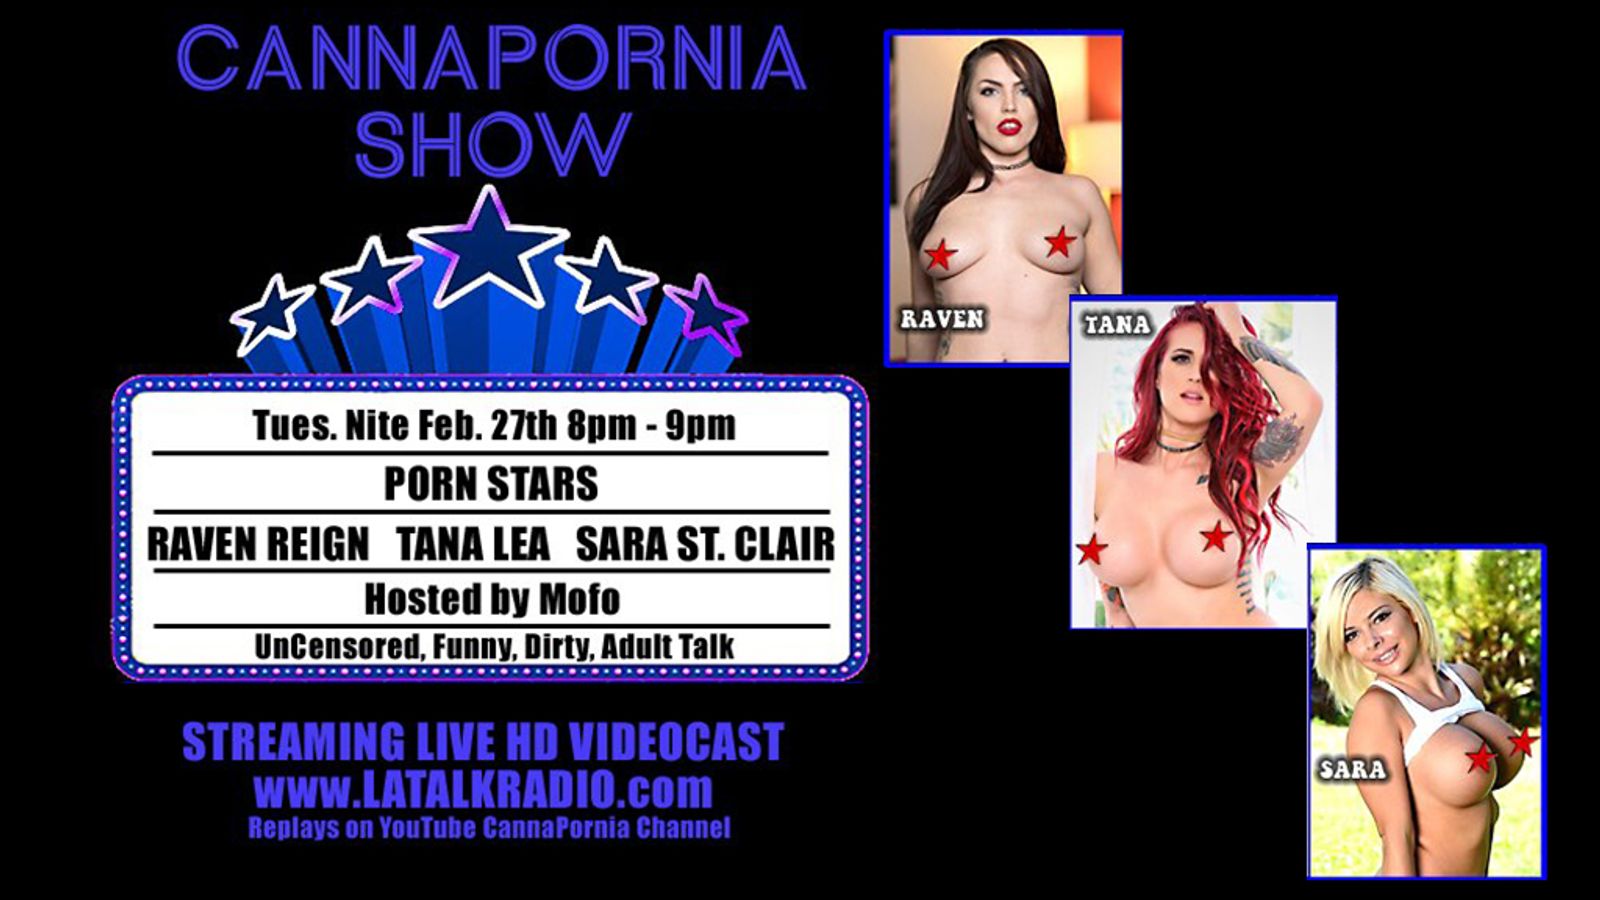 CannaPornia Show Features Tana Lea, Sara St. Clair, Raven Reign